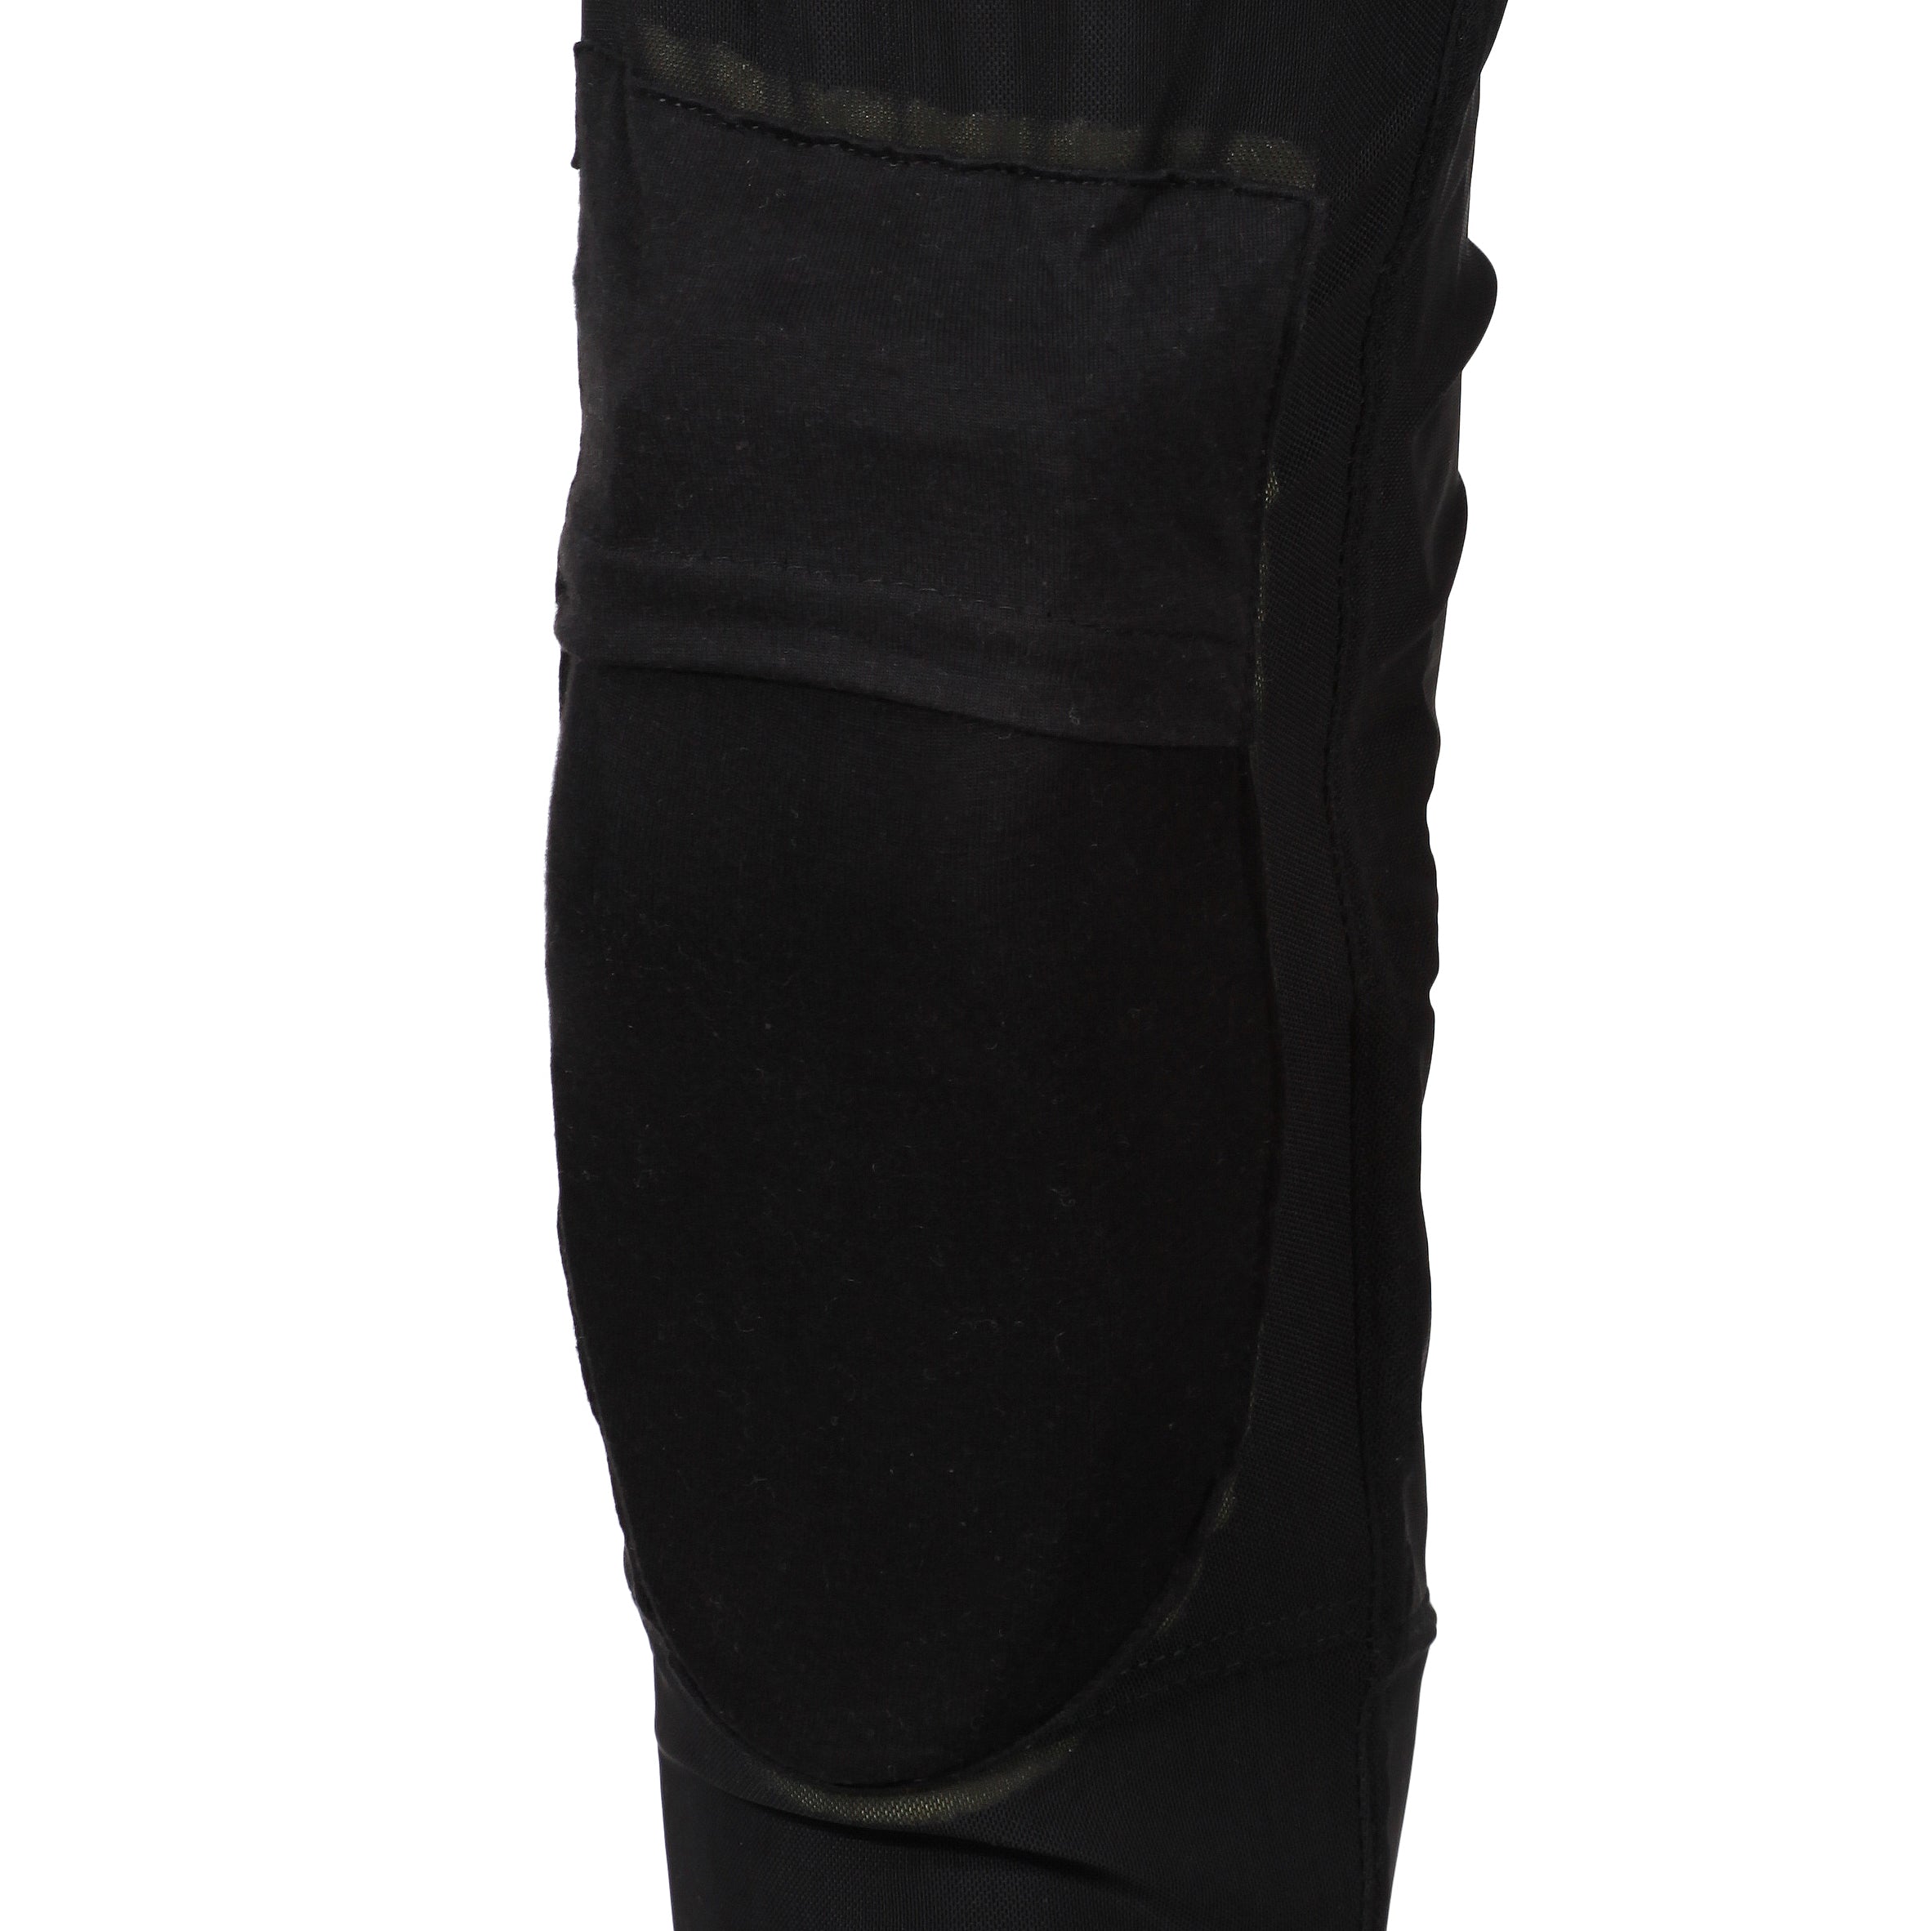 The protector knee pocket of the MotoGirl Sherrie black motorcycle leggings 